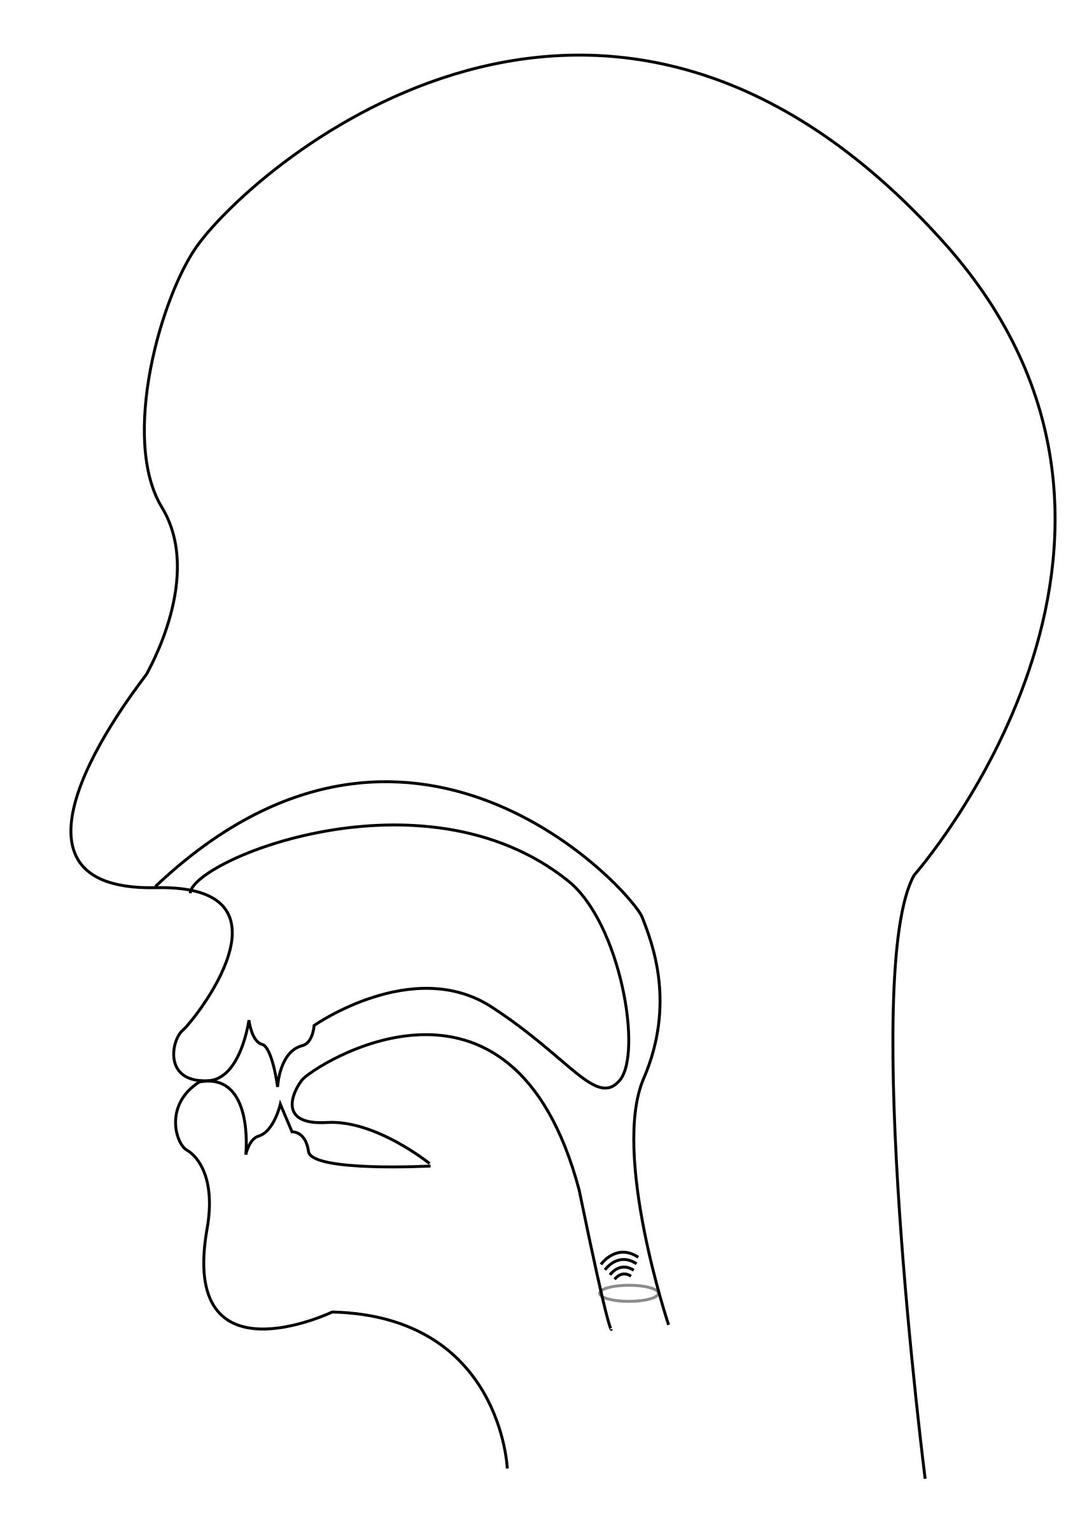 midsagittal M - voiced bilabial nasal png transparent